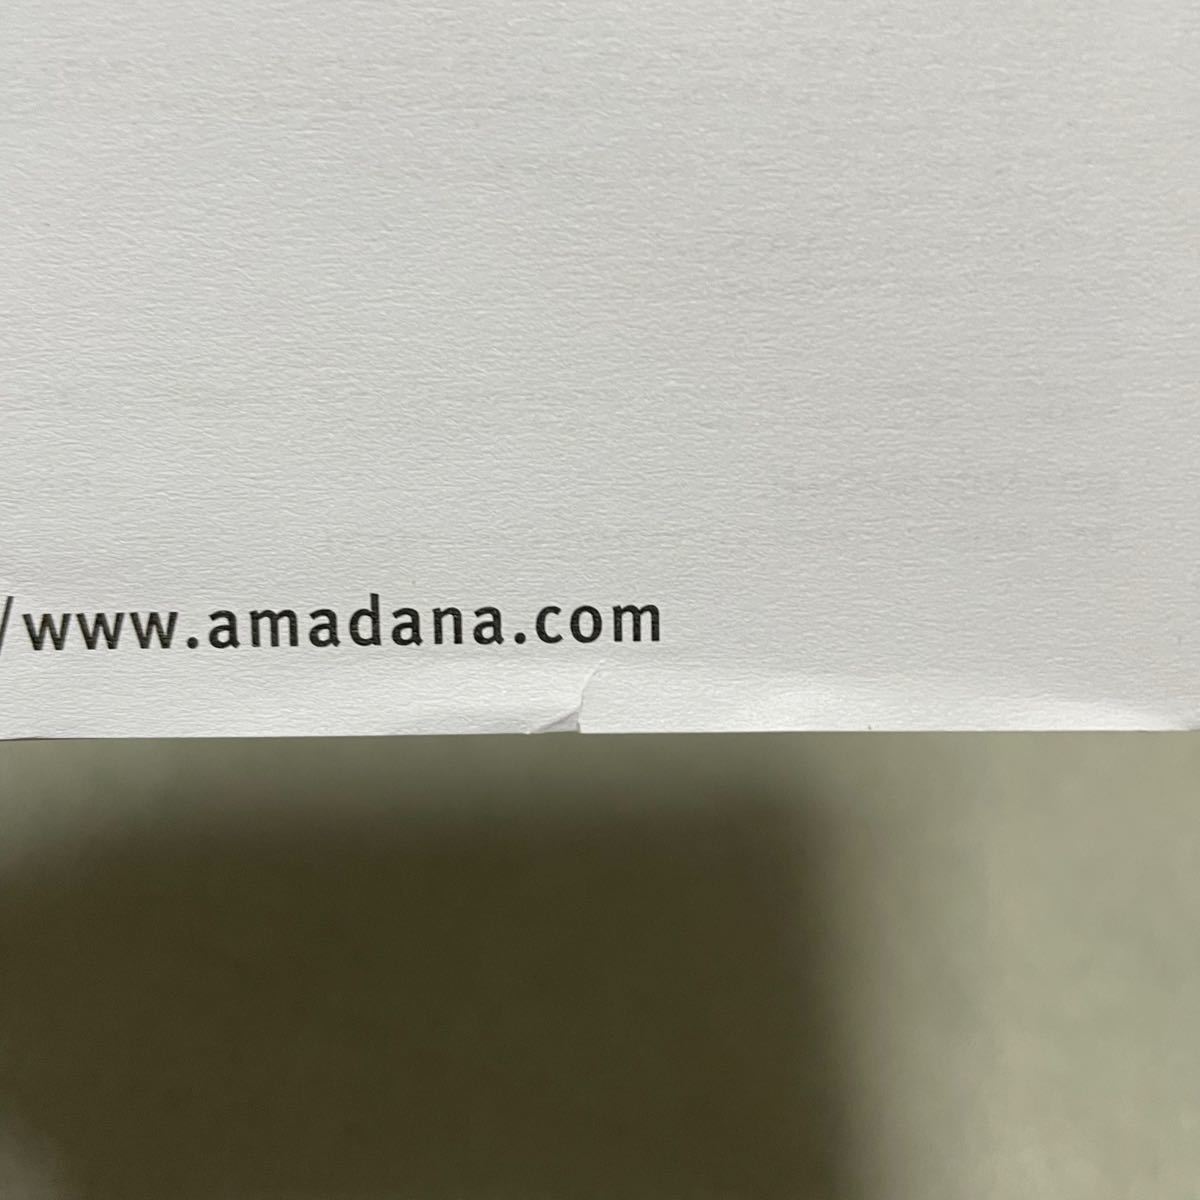 amadana アマダナ 電子計算機 電卓 12桁 ホワイト